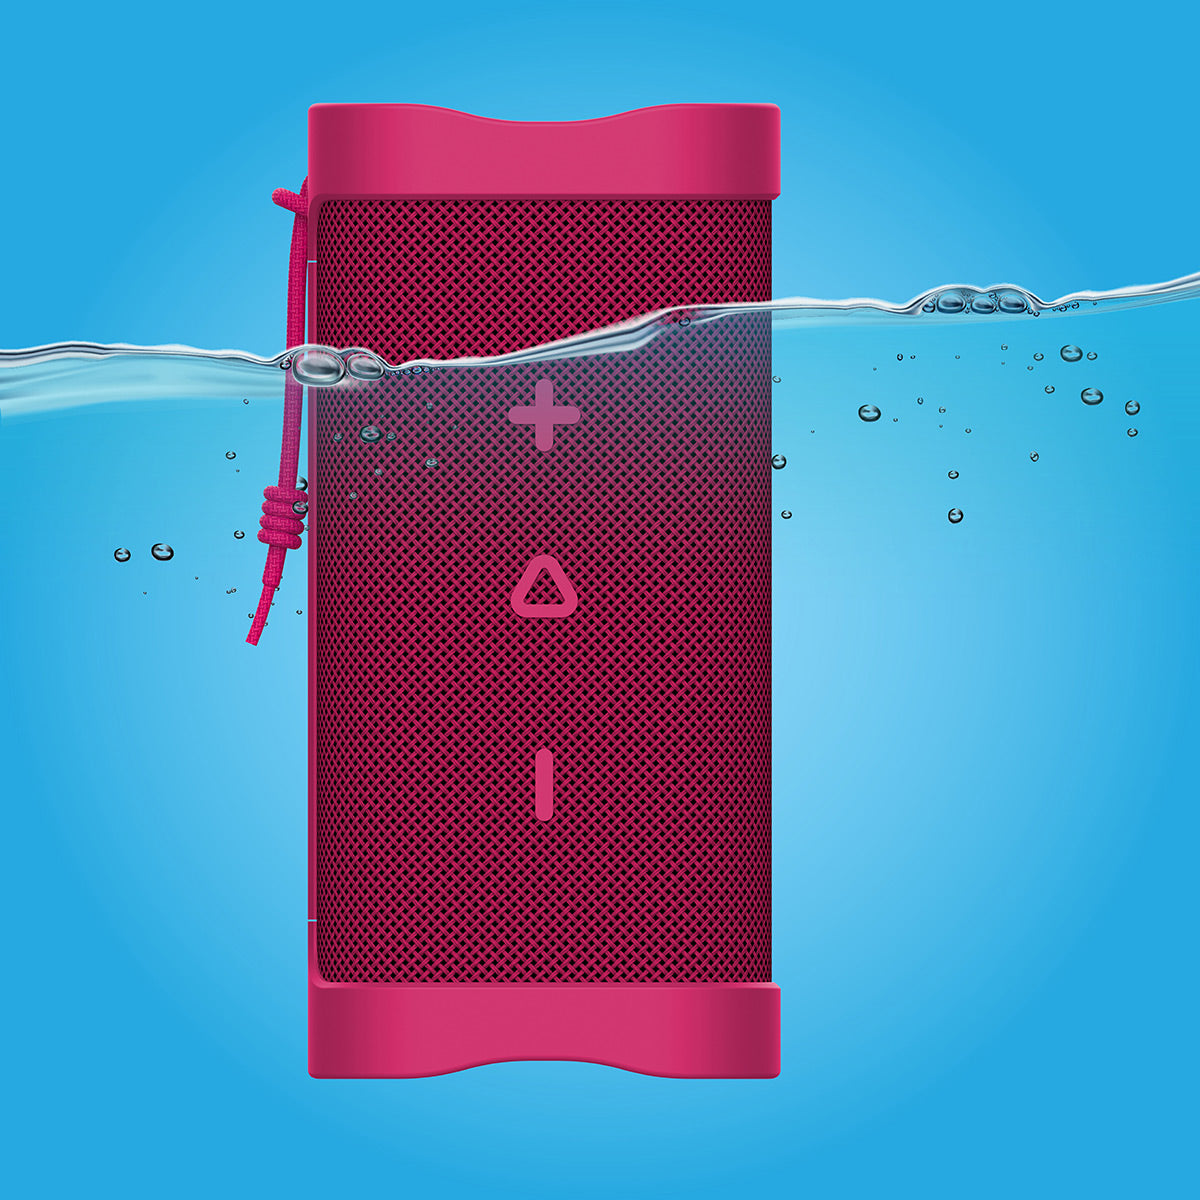 Skullcandy Terrain Wireless Bluetooth Speaker with IPX7 Waterproof Rating (Pink)